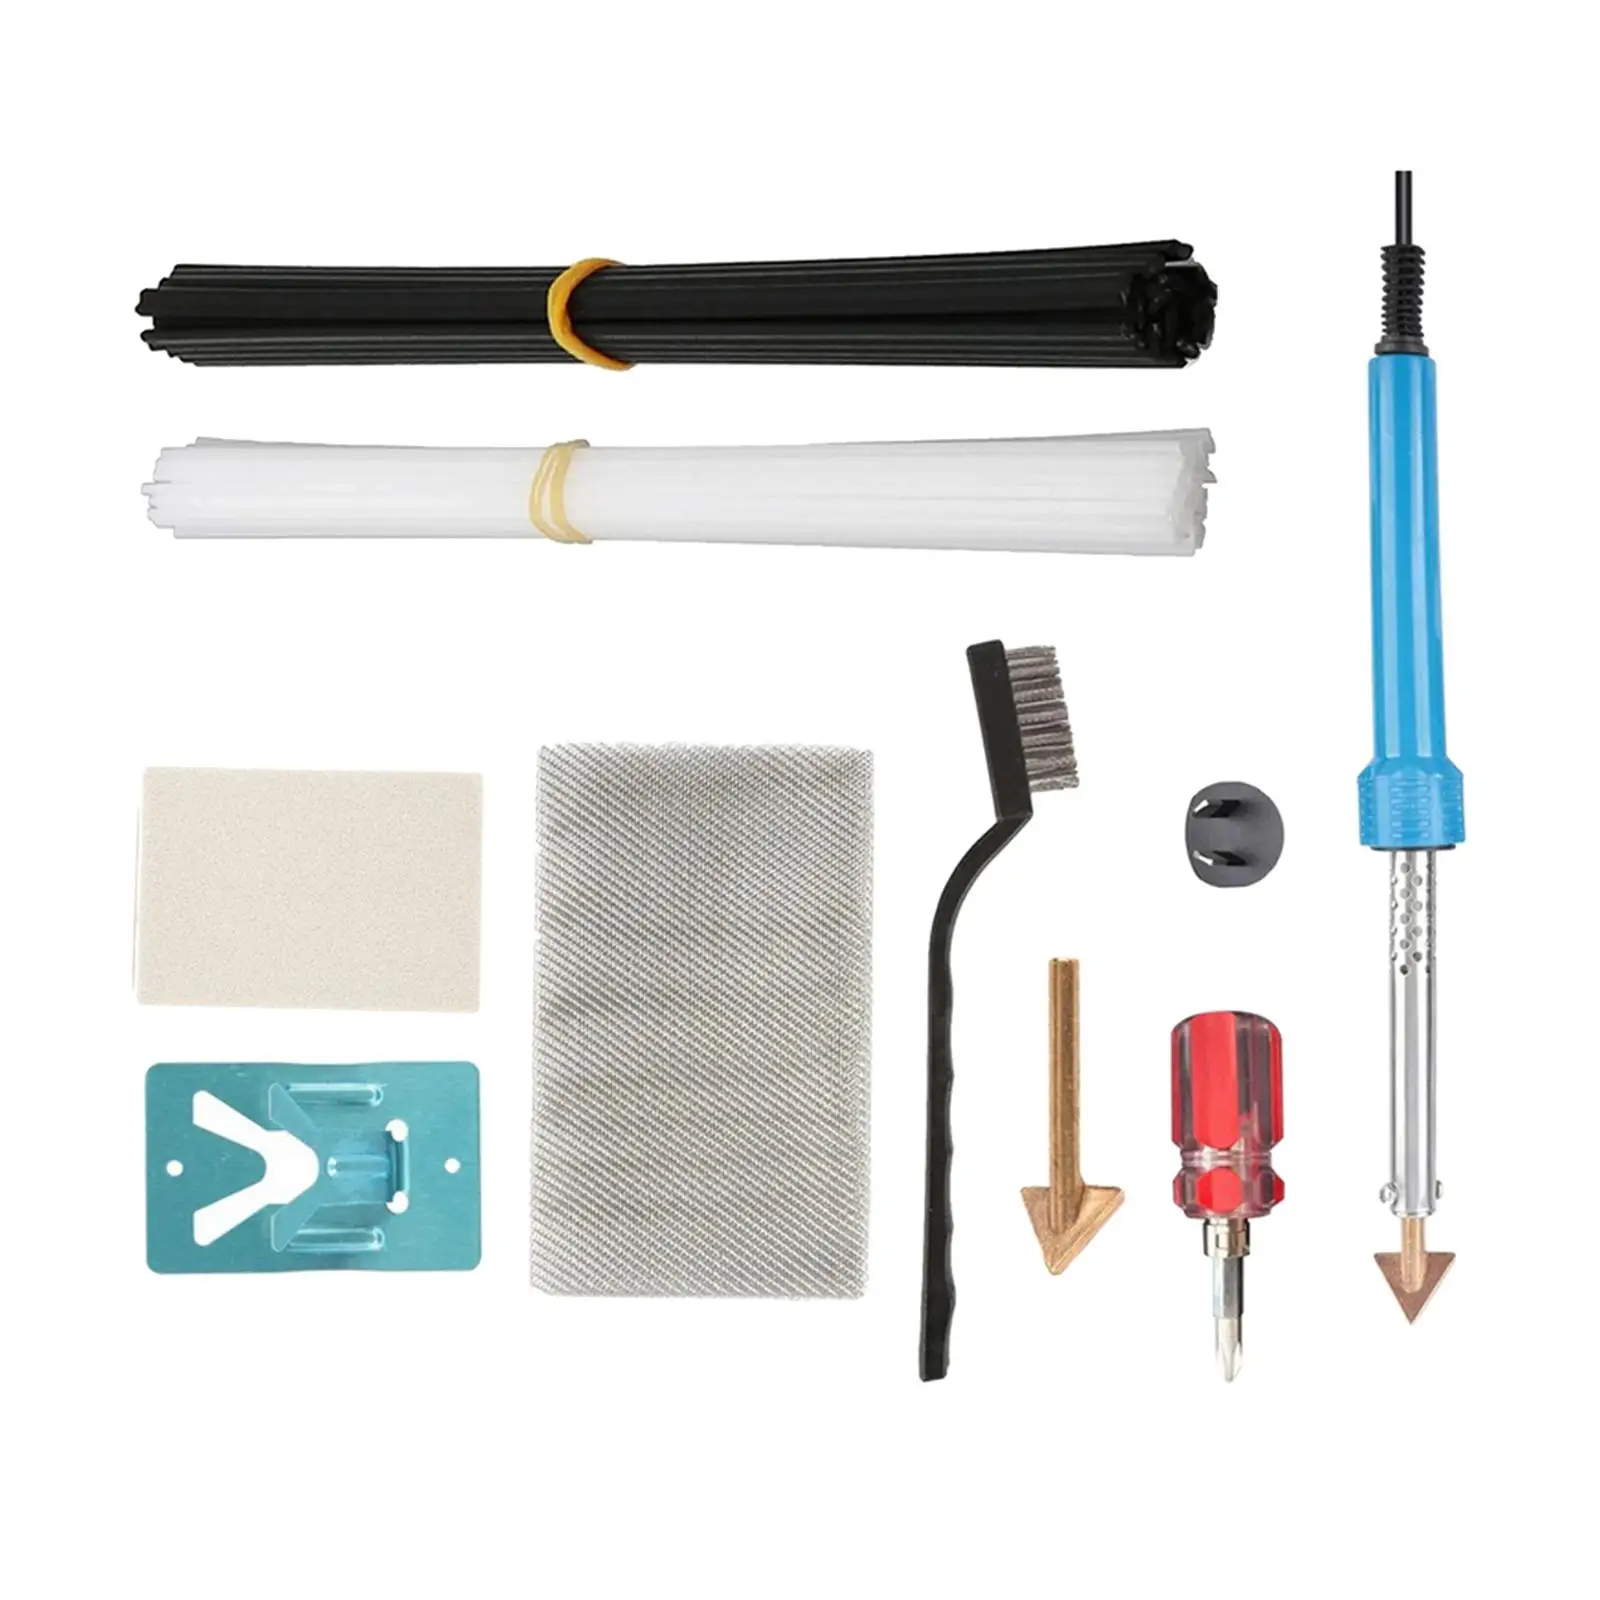 Plastic Welding Kit 1 Metal Stand 1 Metal Mesh 80W Welder Tools for Kayak